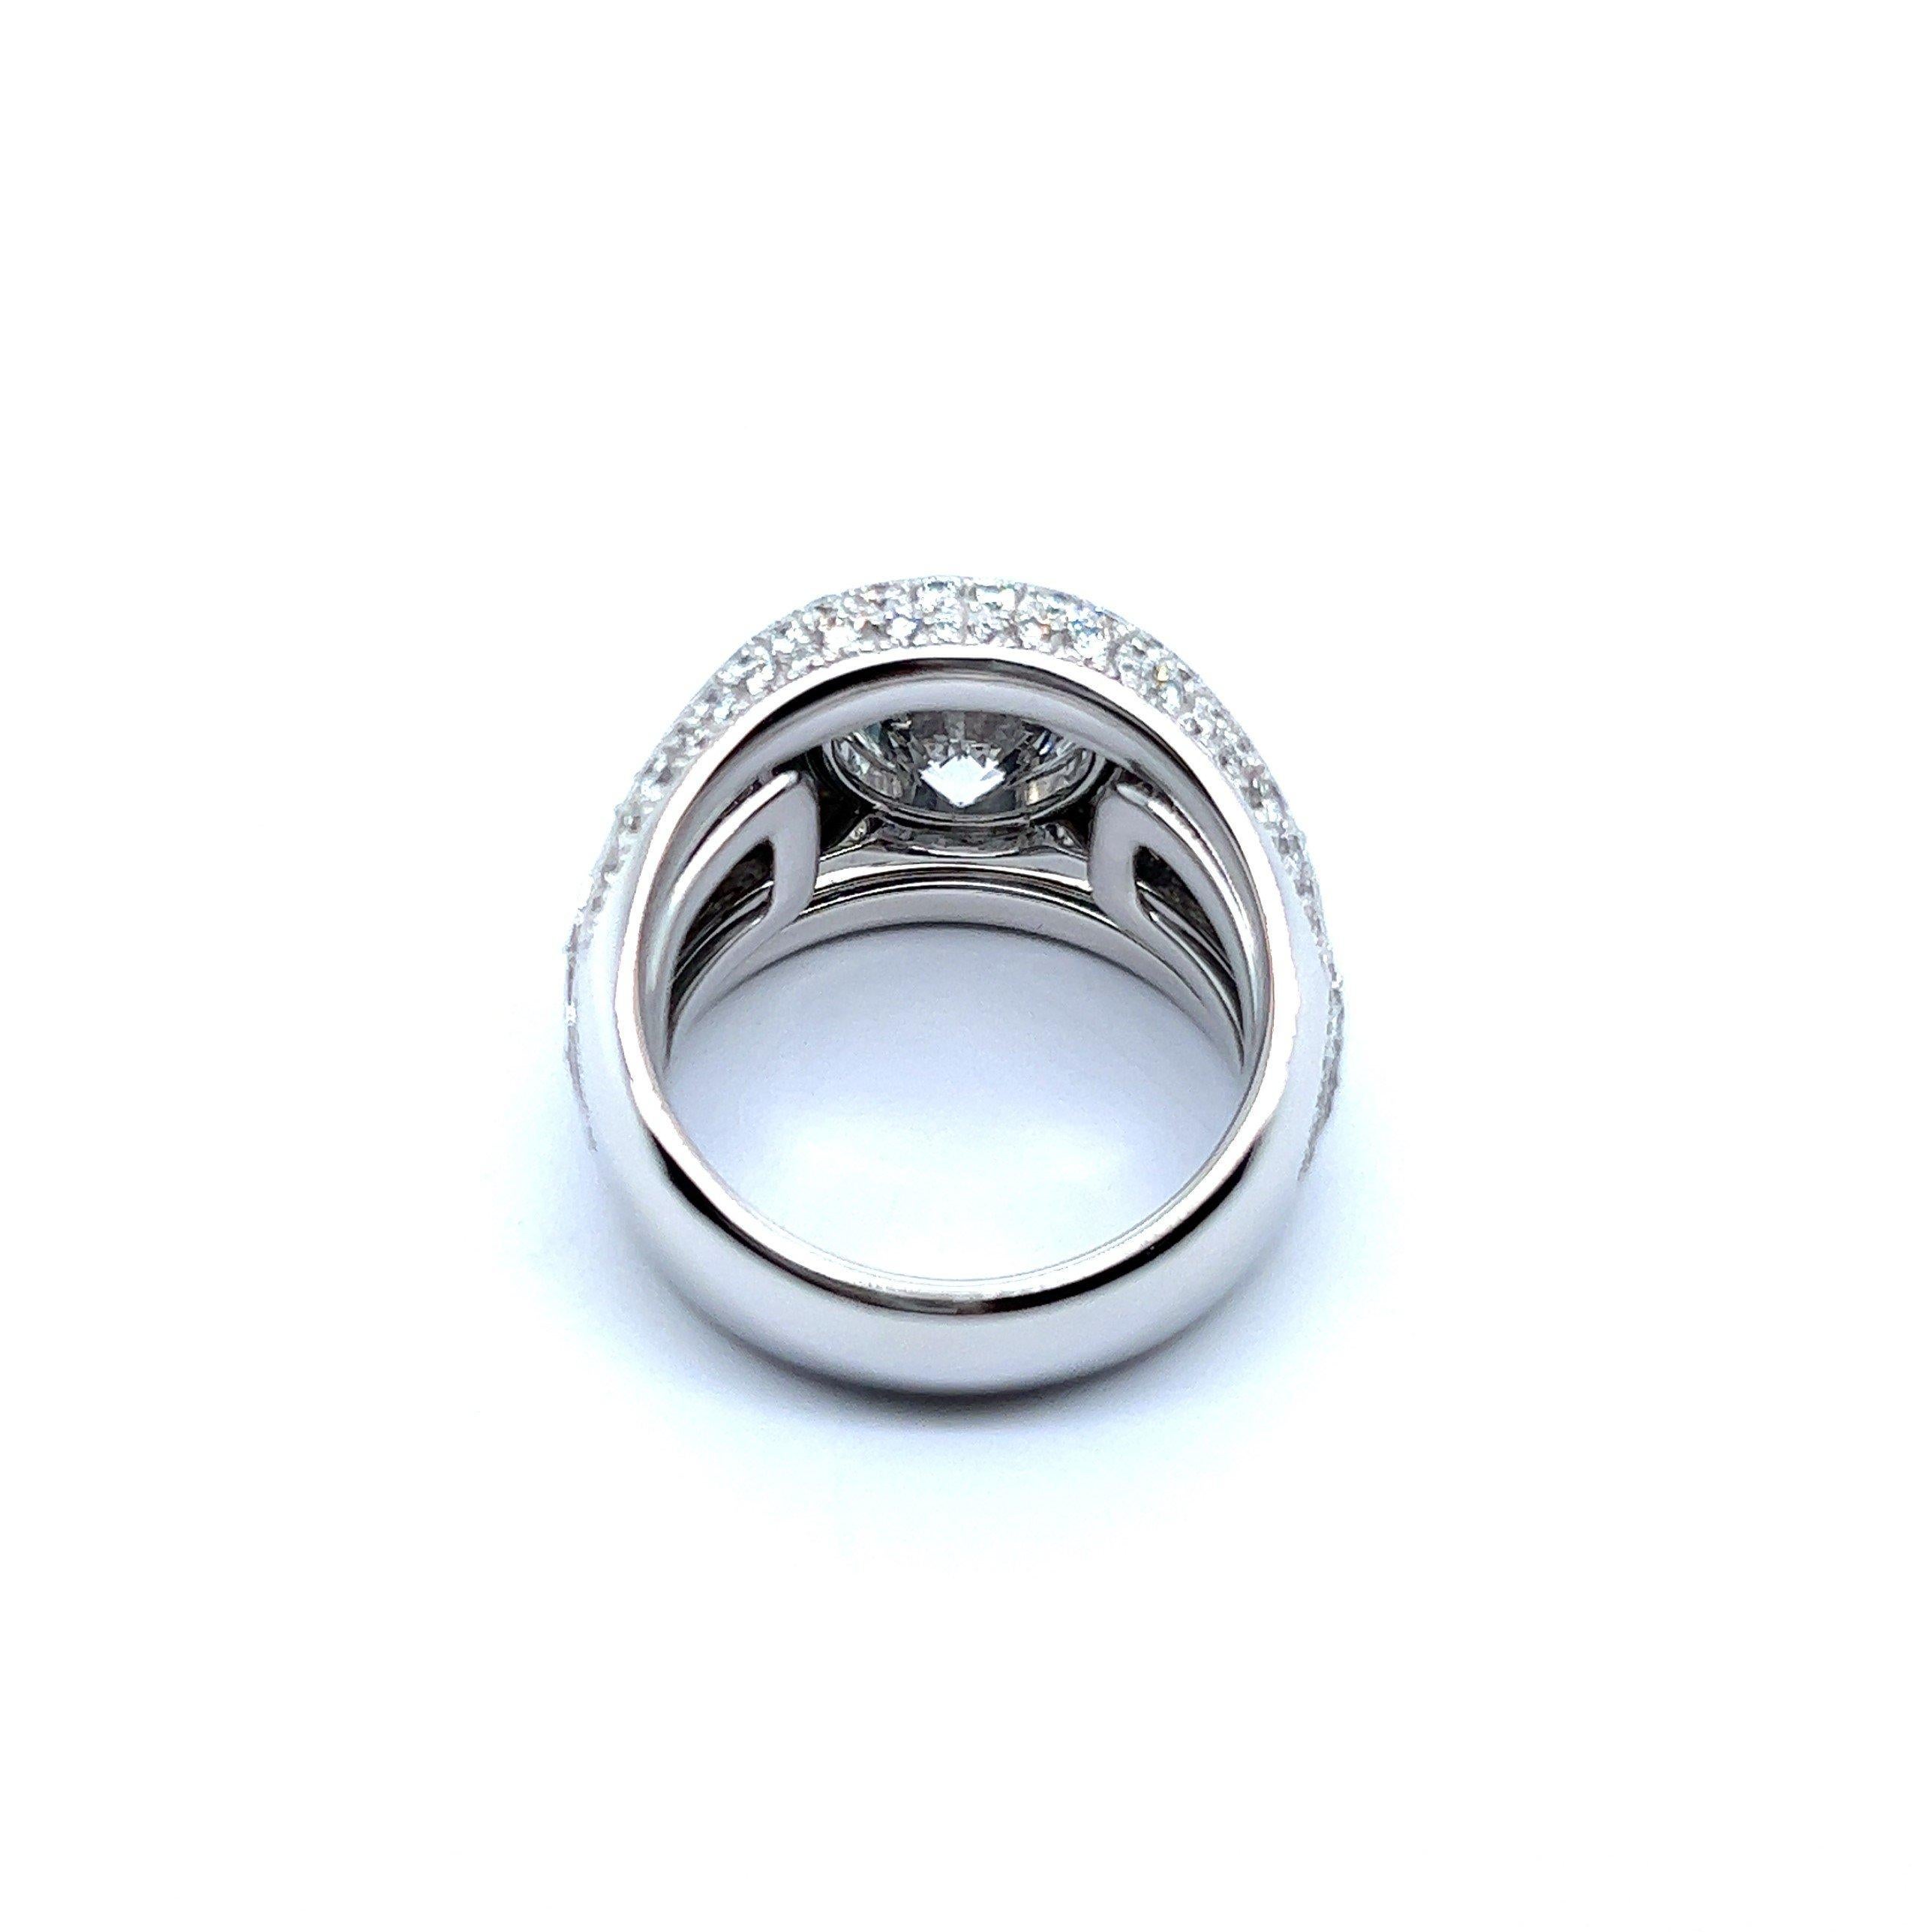 Women's or Men's GIA Certified 2.69 Carat Diamond Ring in Platinum by Péclard For Sale